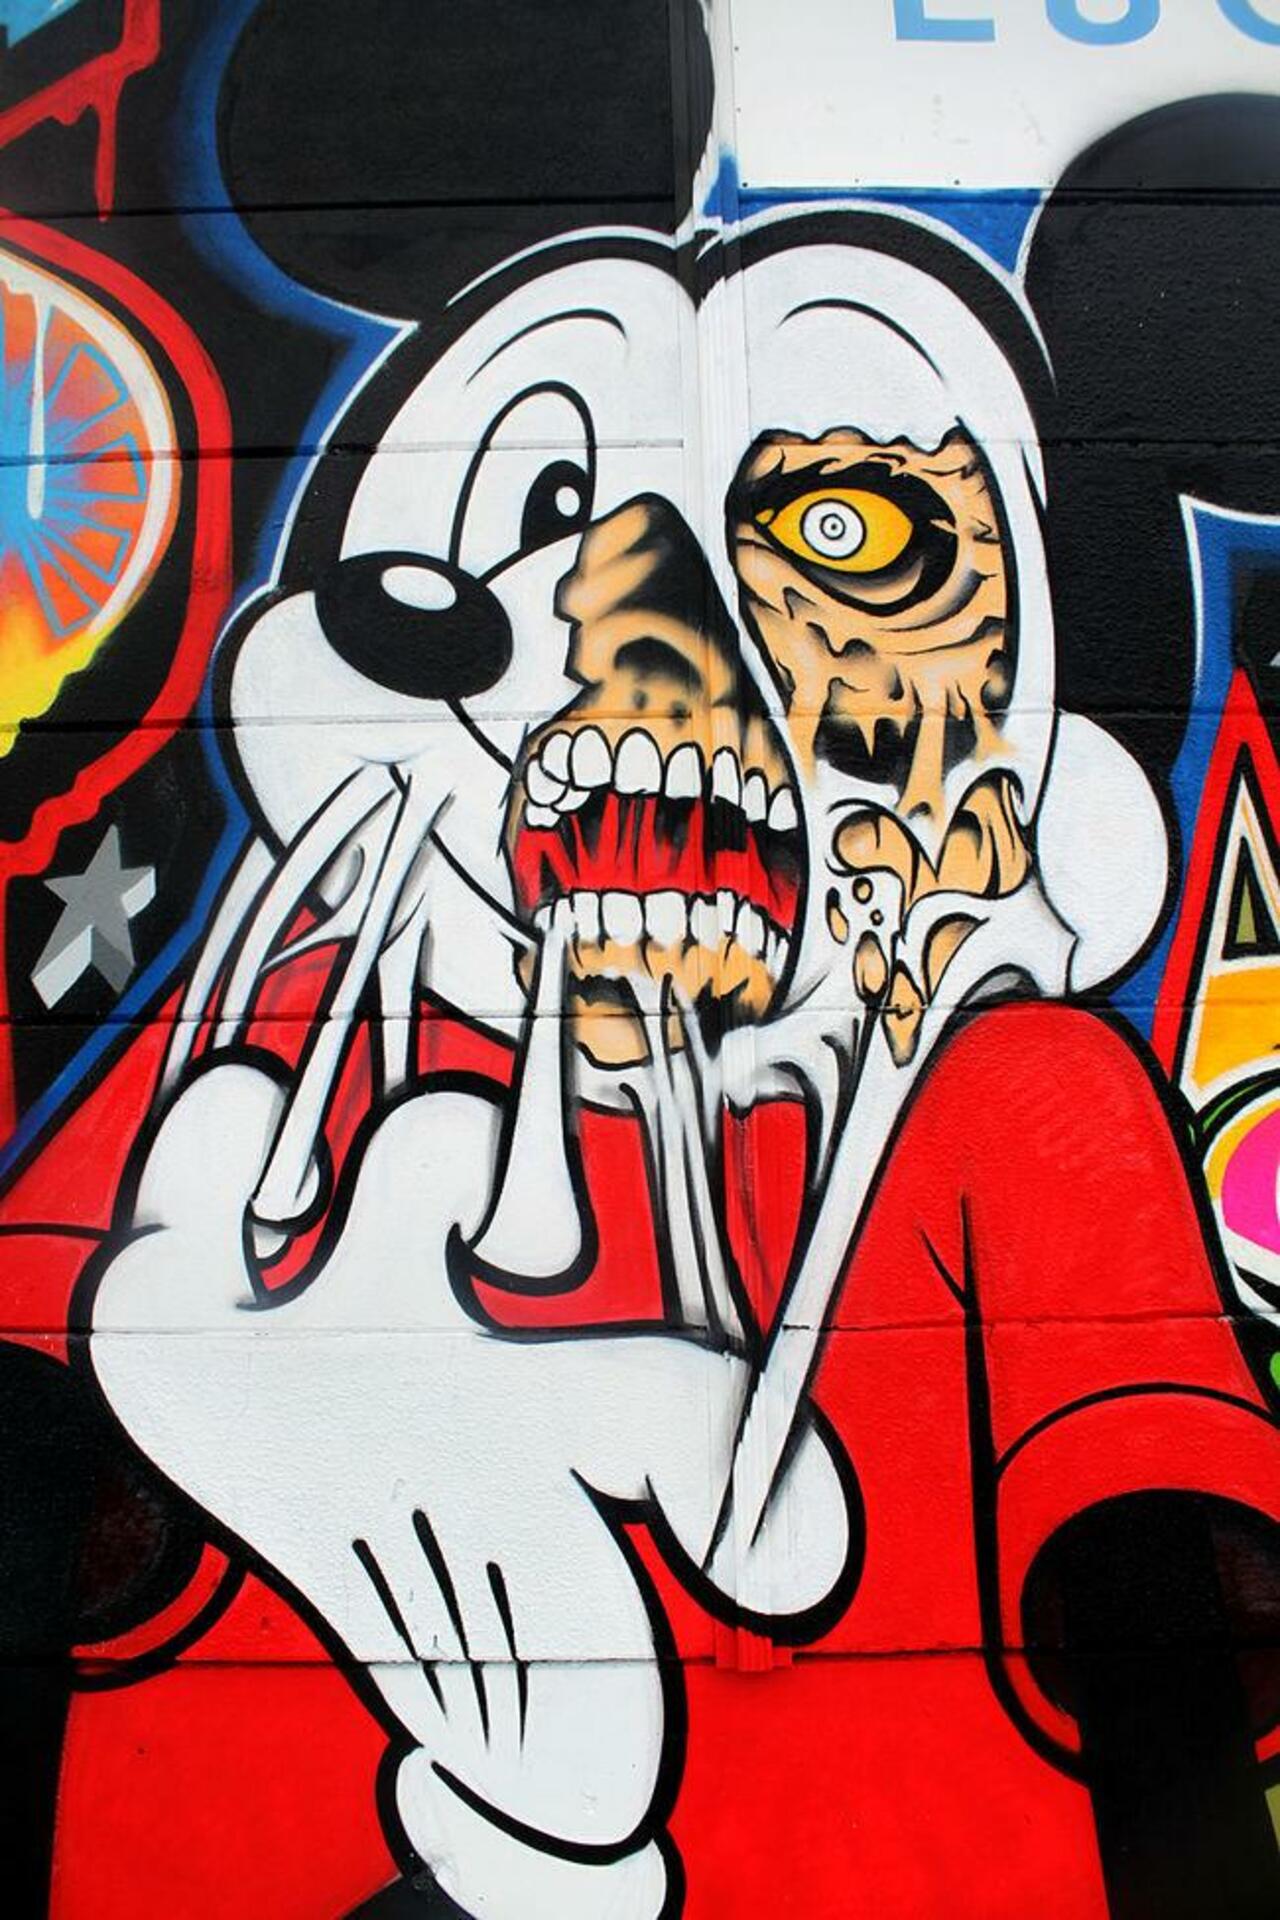 RT @IndieUndrground: Street Art - Artist & Location unknown - #Art #StreetArt #Mickey #Paint #Graffiti #Graff - http://t.co/yZYVRNHSOr